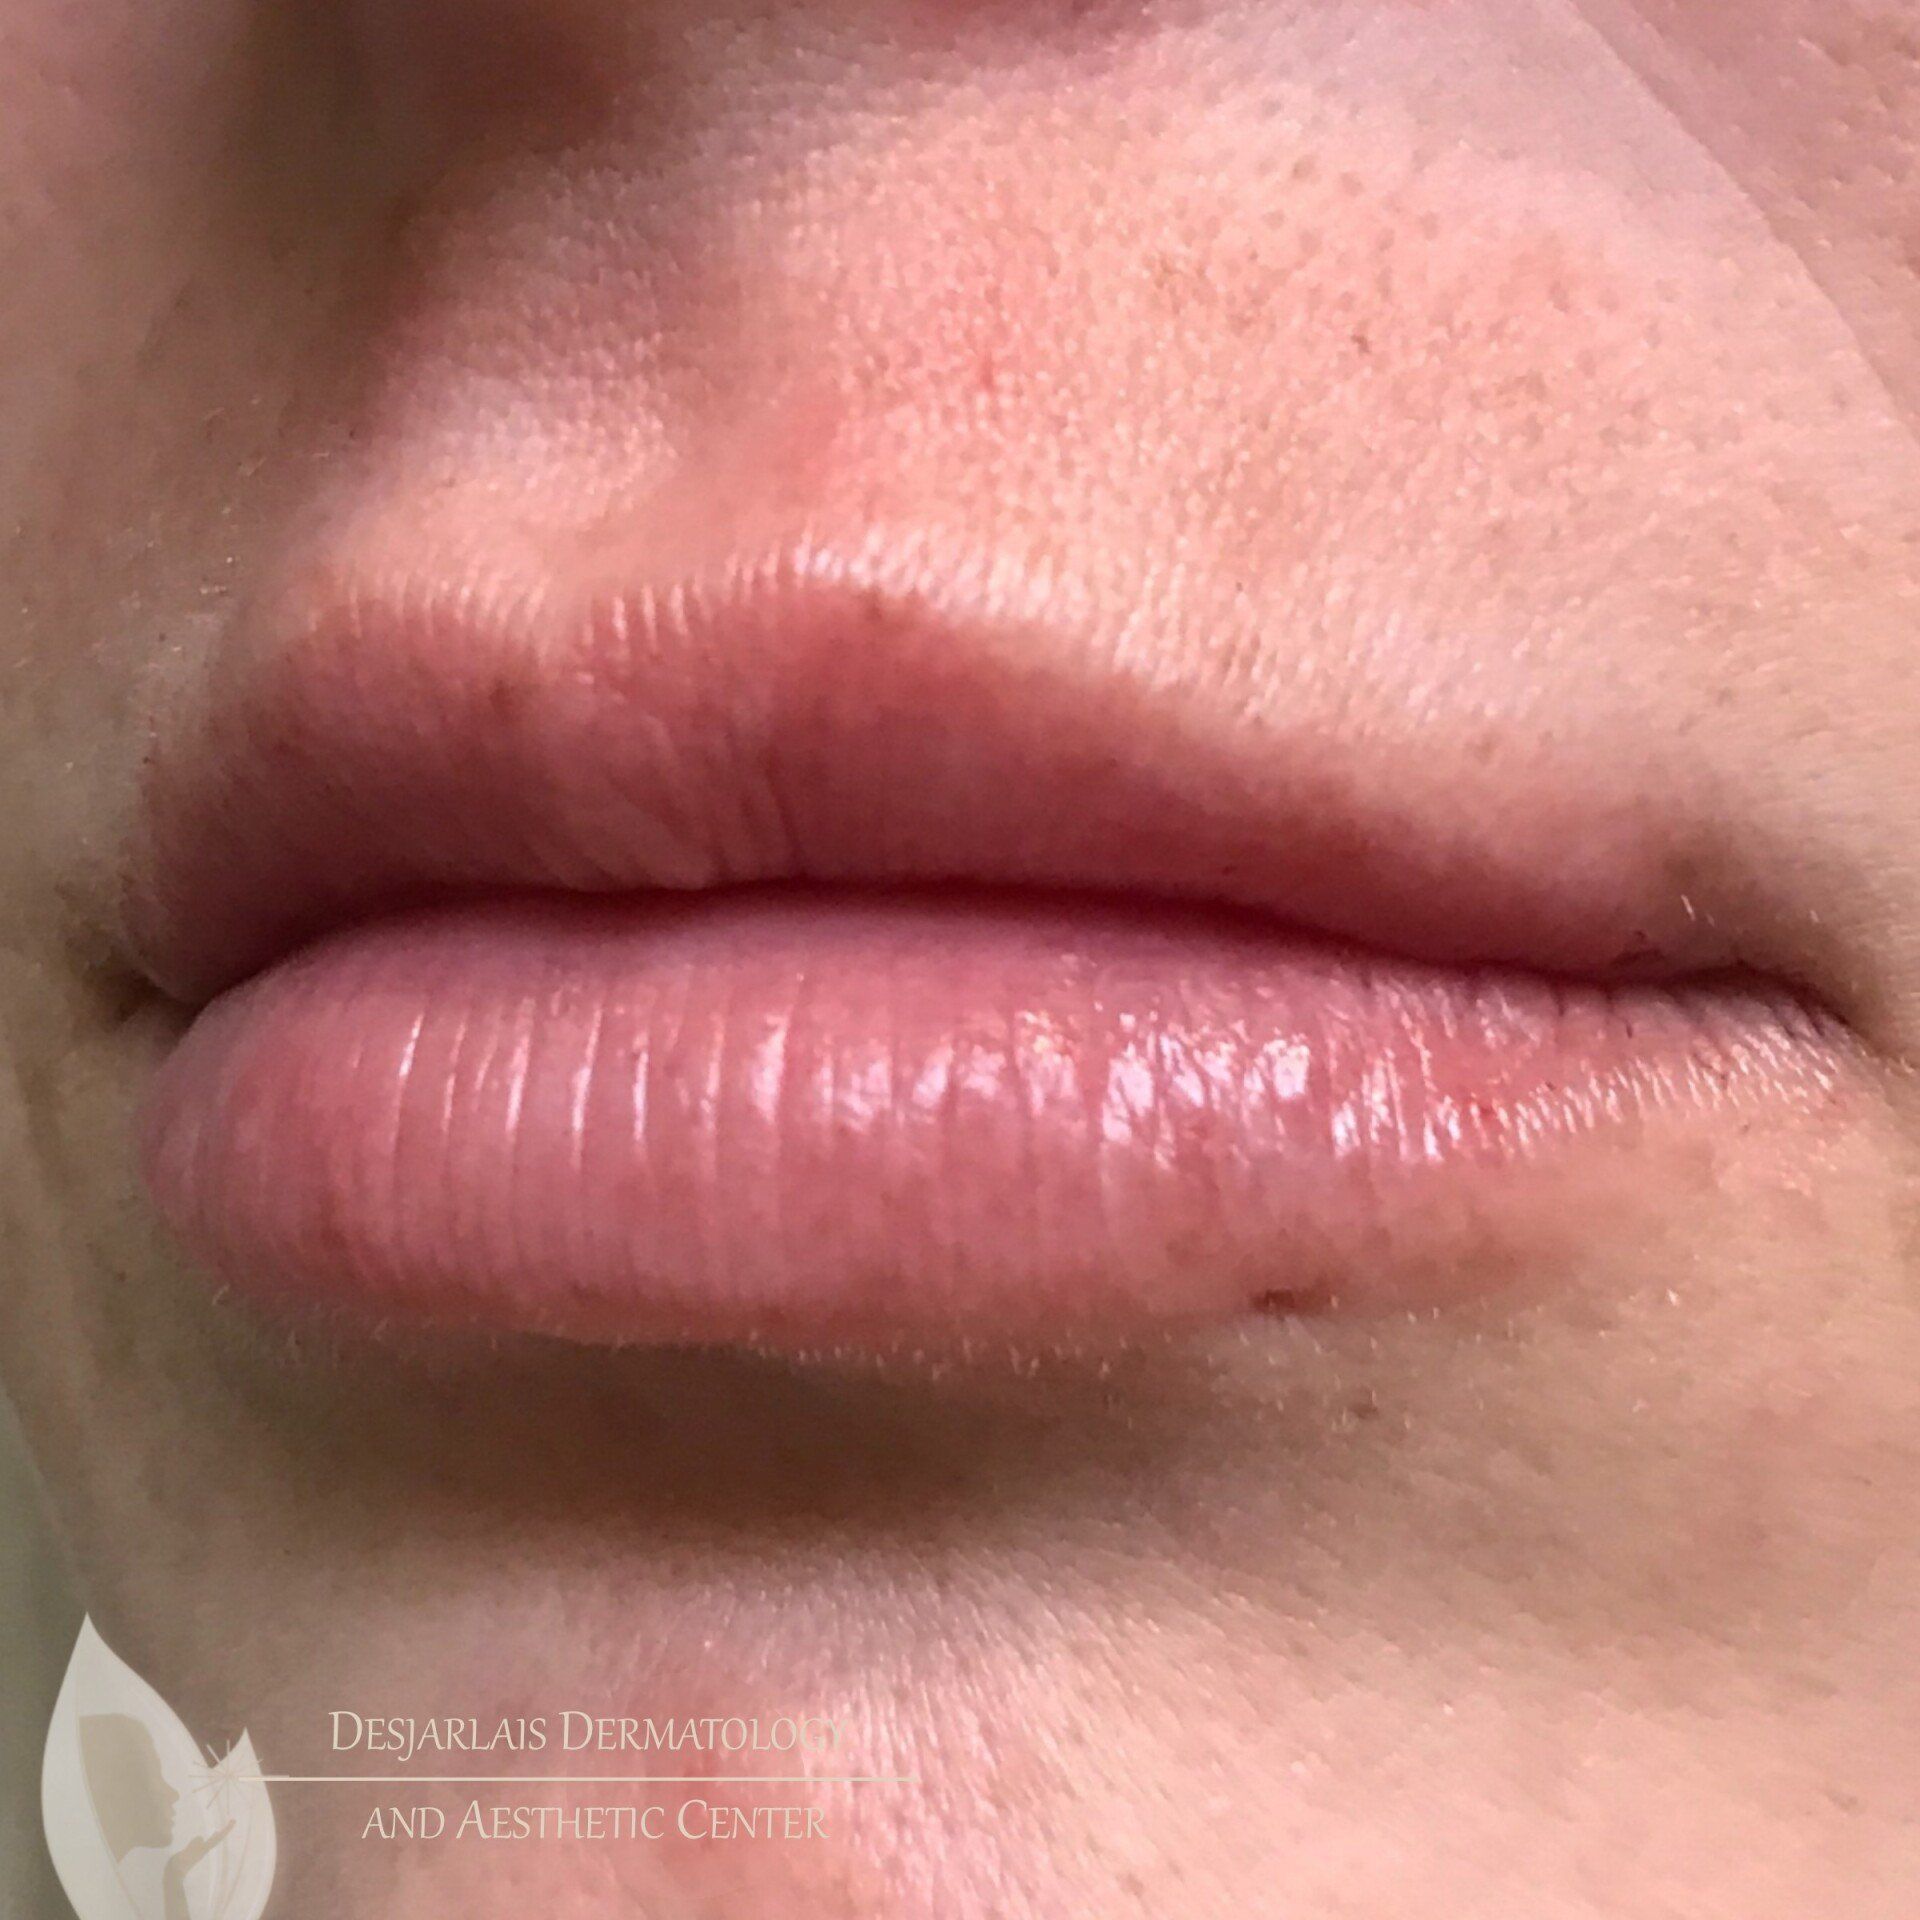 Lip Filler After Image at Dr. Desjarlais' Office in Adrian, MI